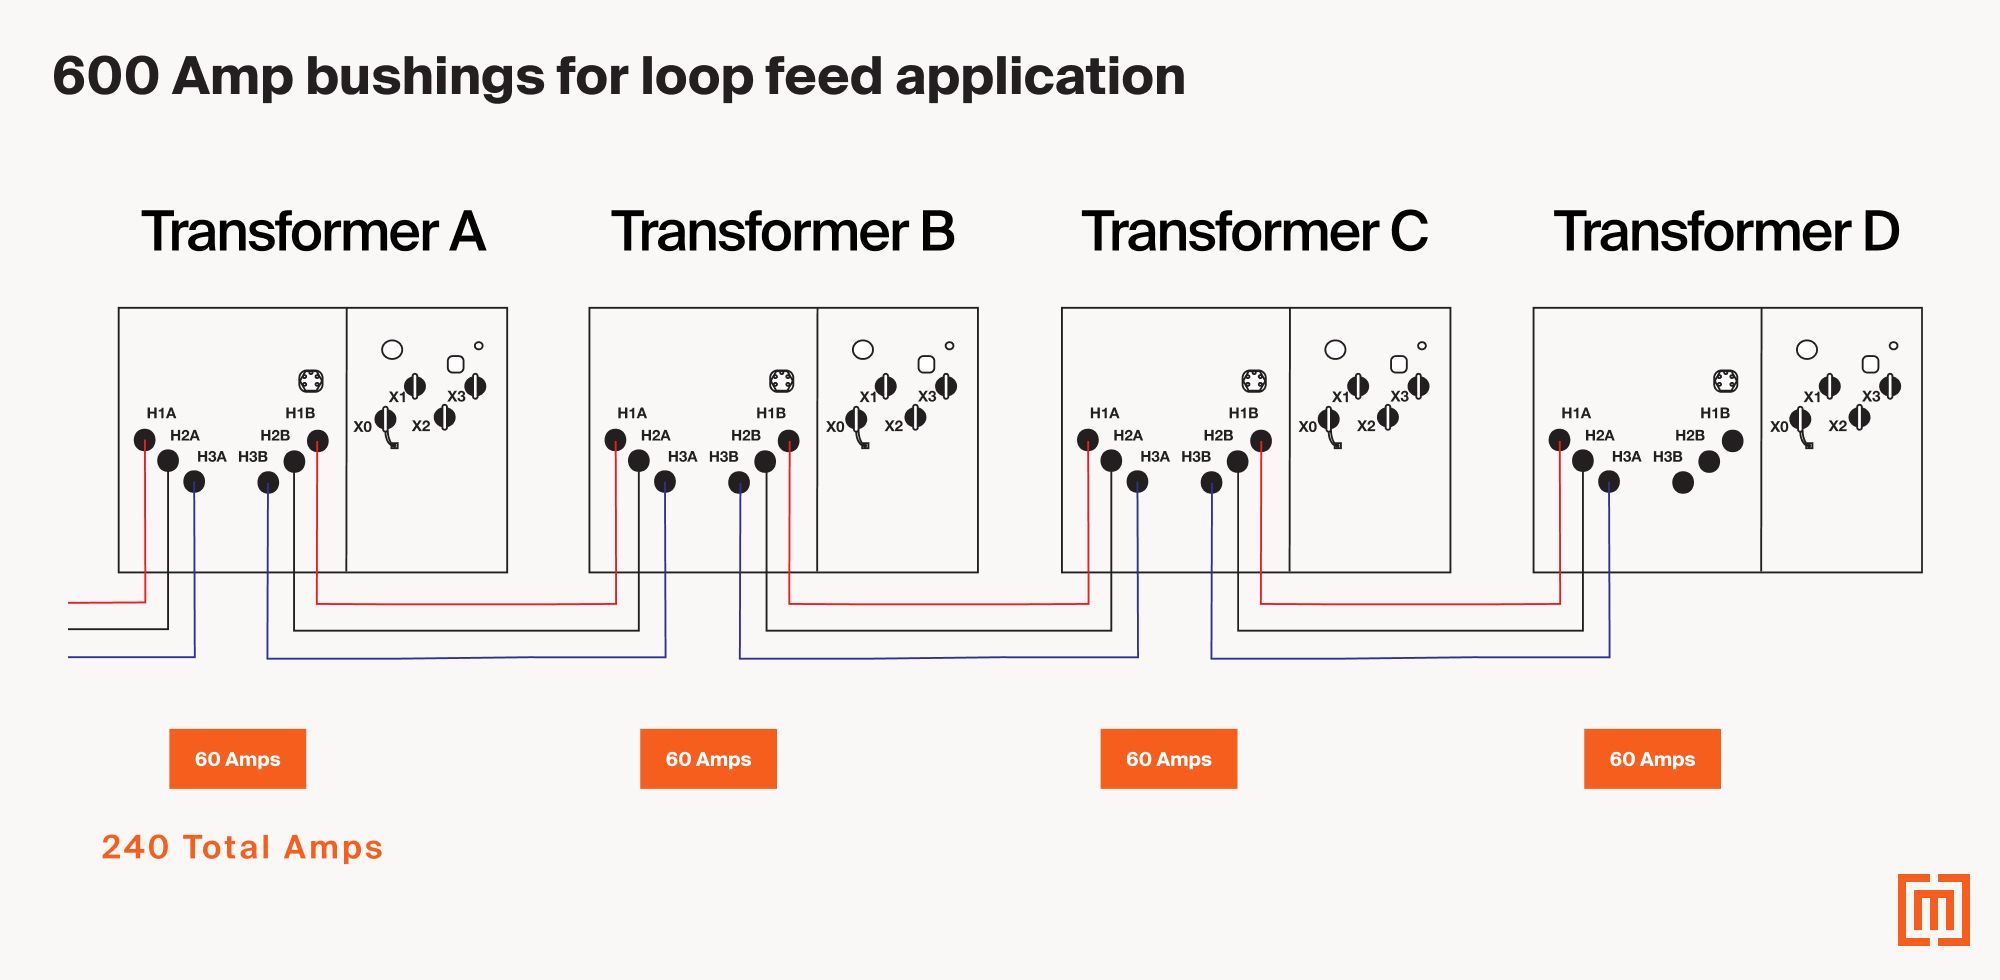 600 Amp bushings in a loop feed padmount transformer application